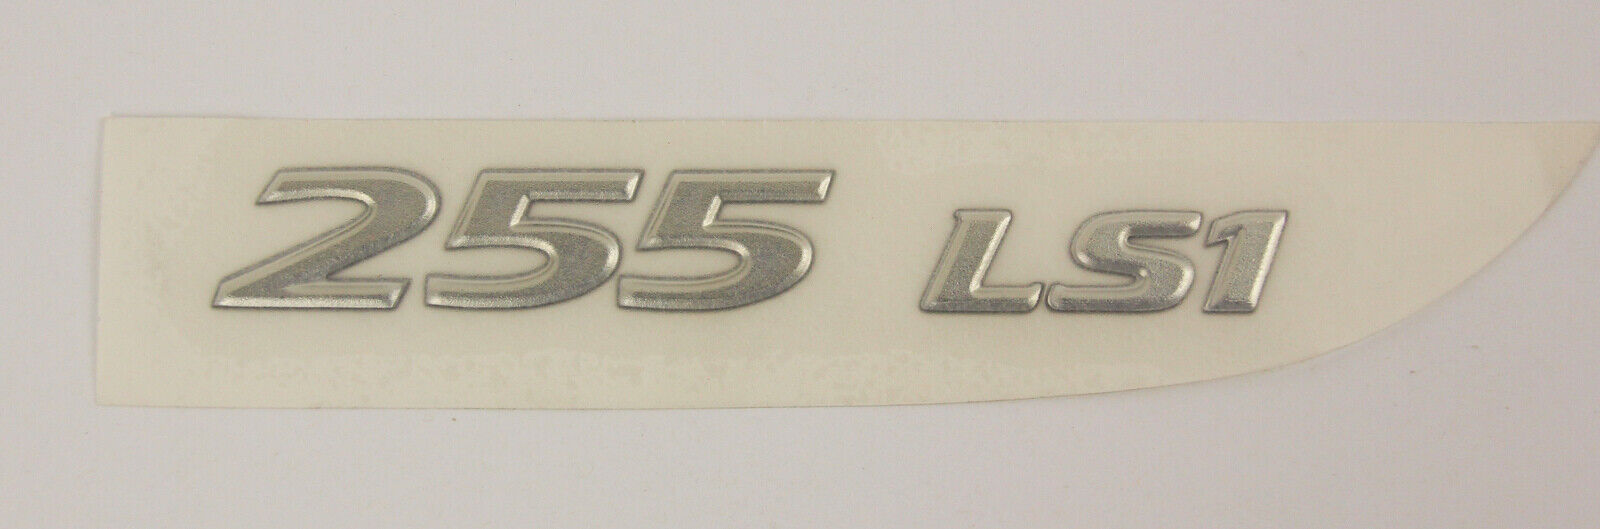 GENUINE HSV '255 LS1' CHROME Bootlid Badge for VX R8 Clubsport Maloo Senator NEW